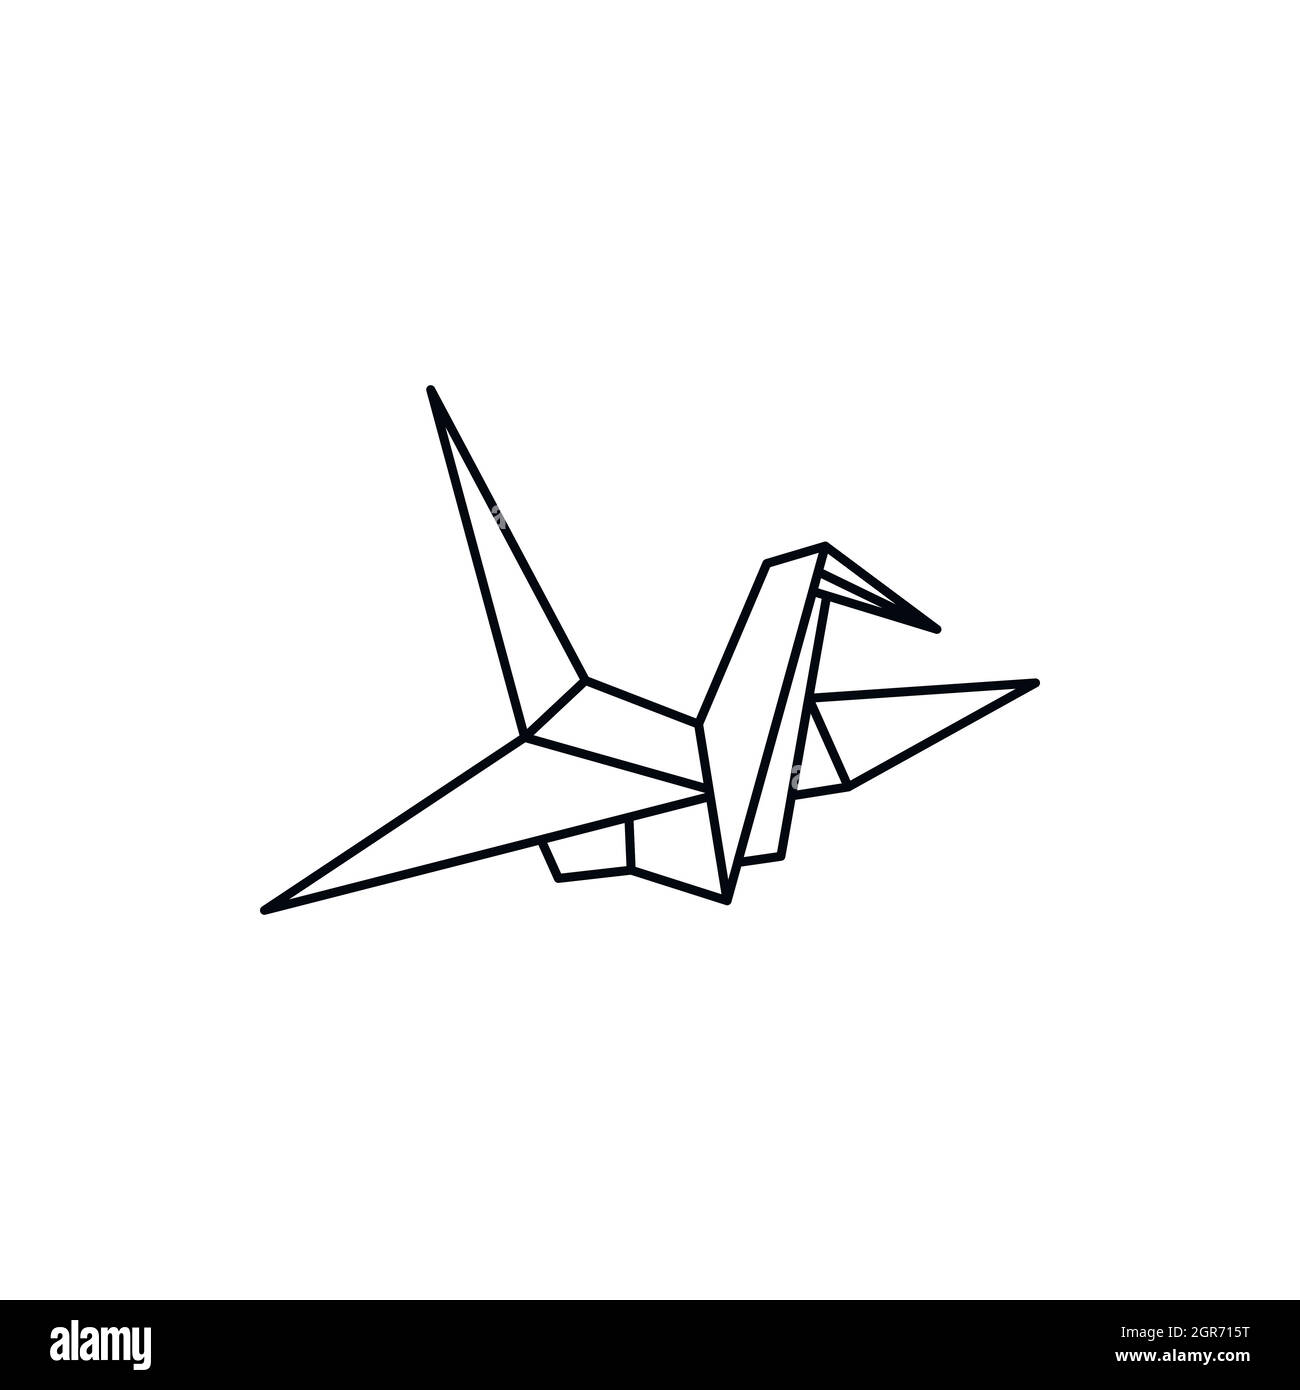 Origami duck stock vector. Illustration of symbol, japanese